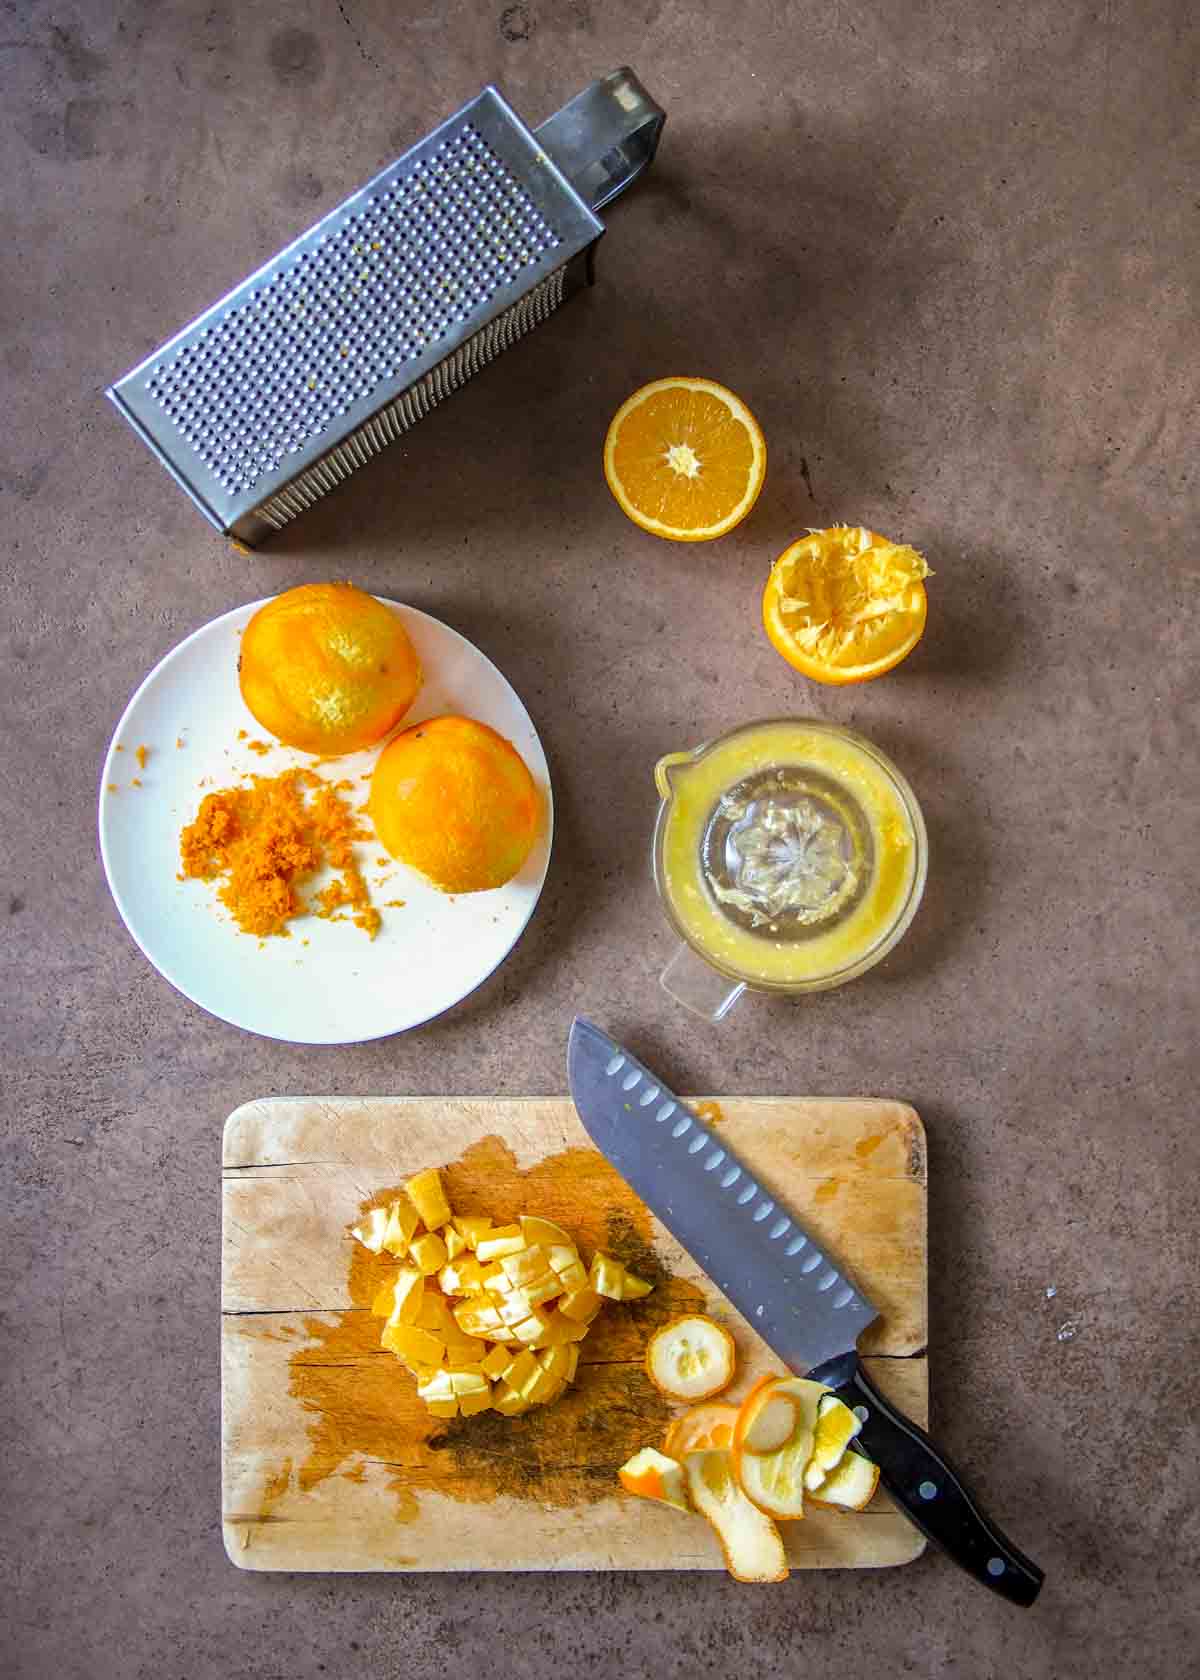 Grated orange for zest and an orange juiced